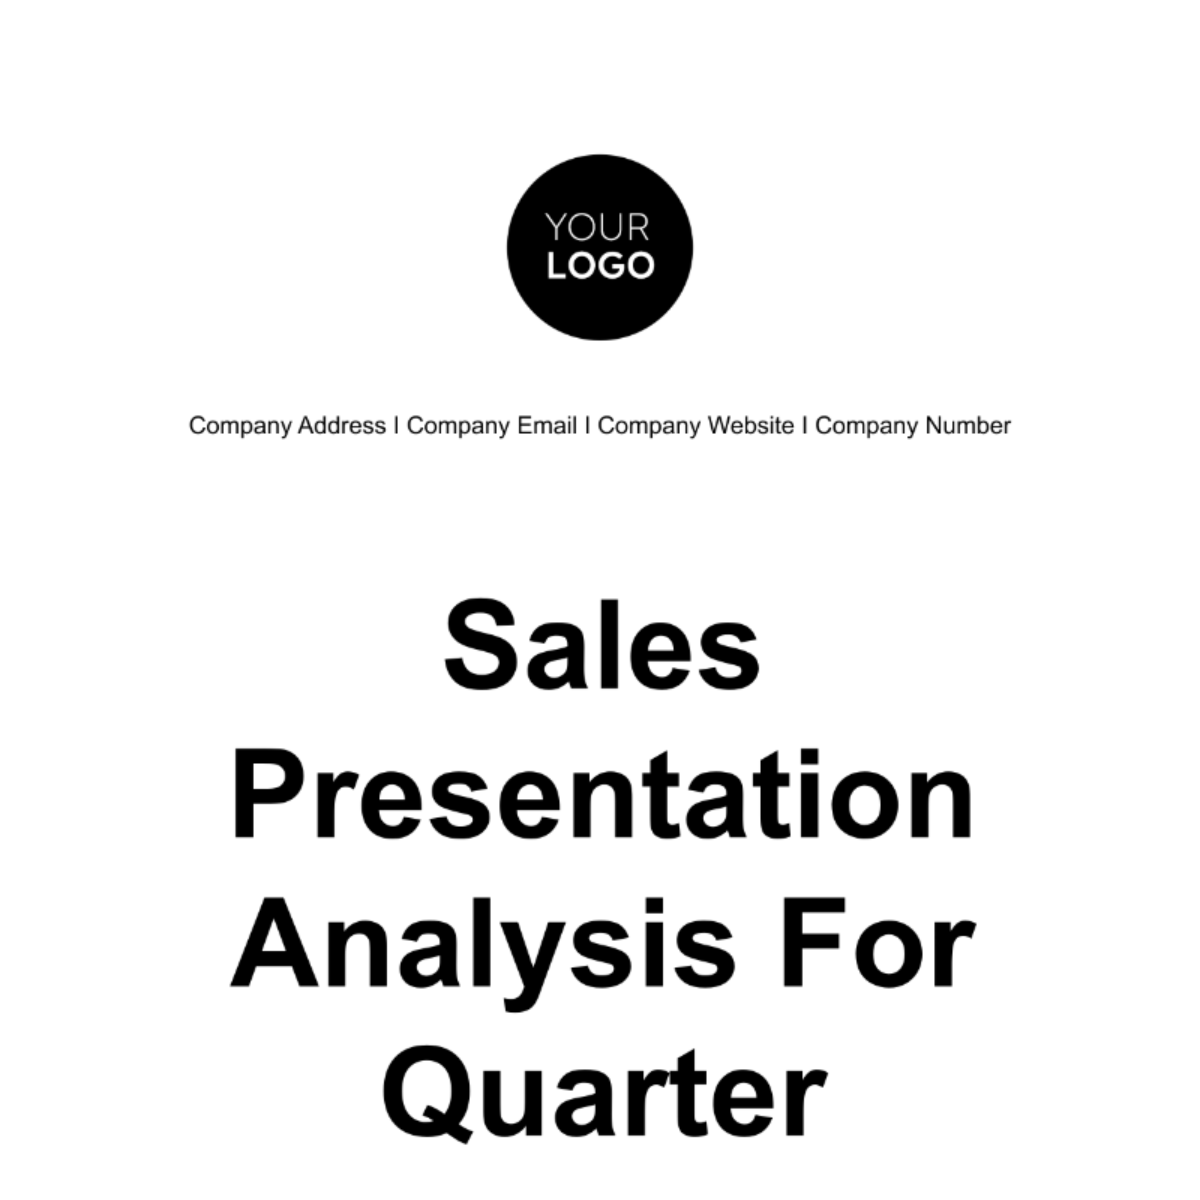 Sales Presentation Analysis for Quarter Template